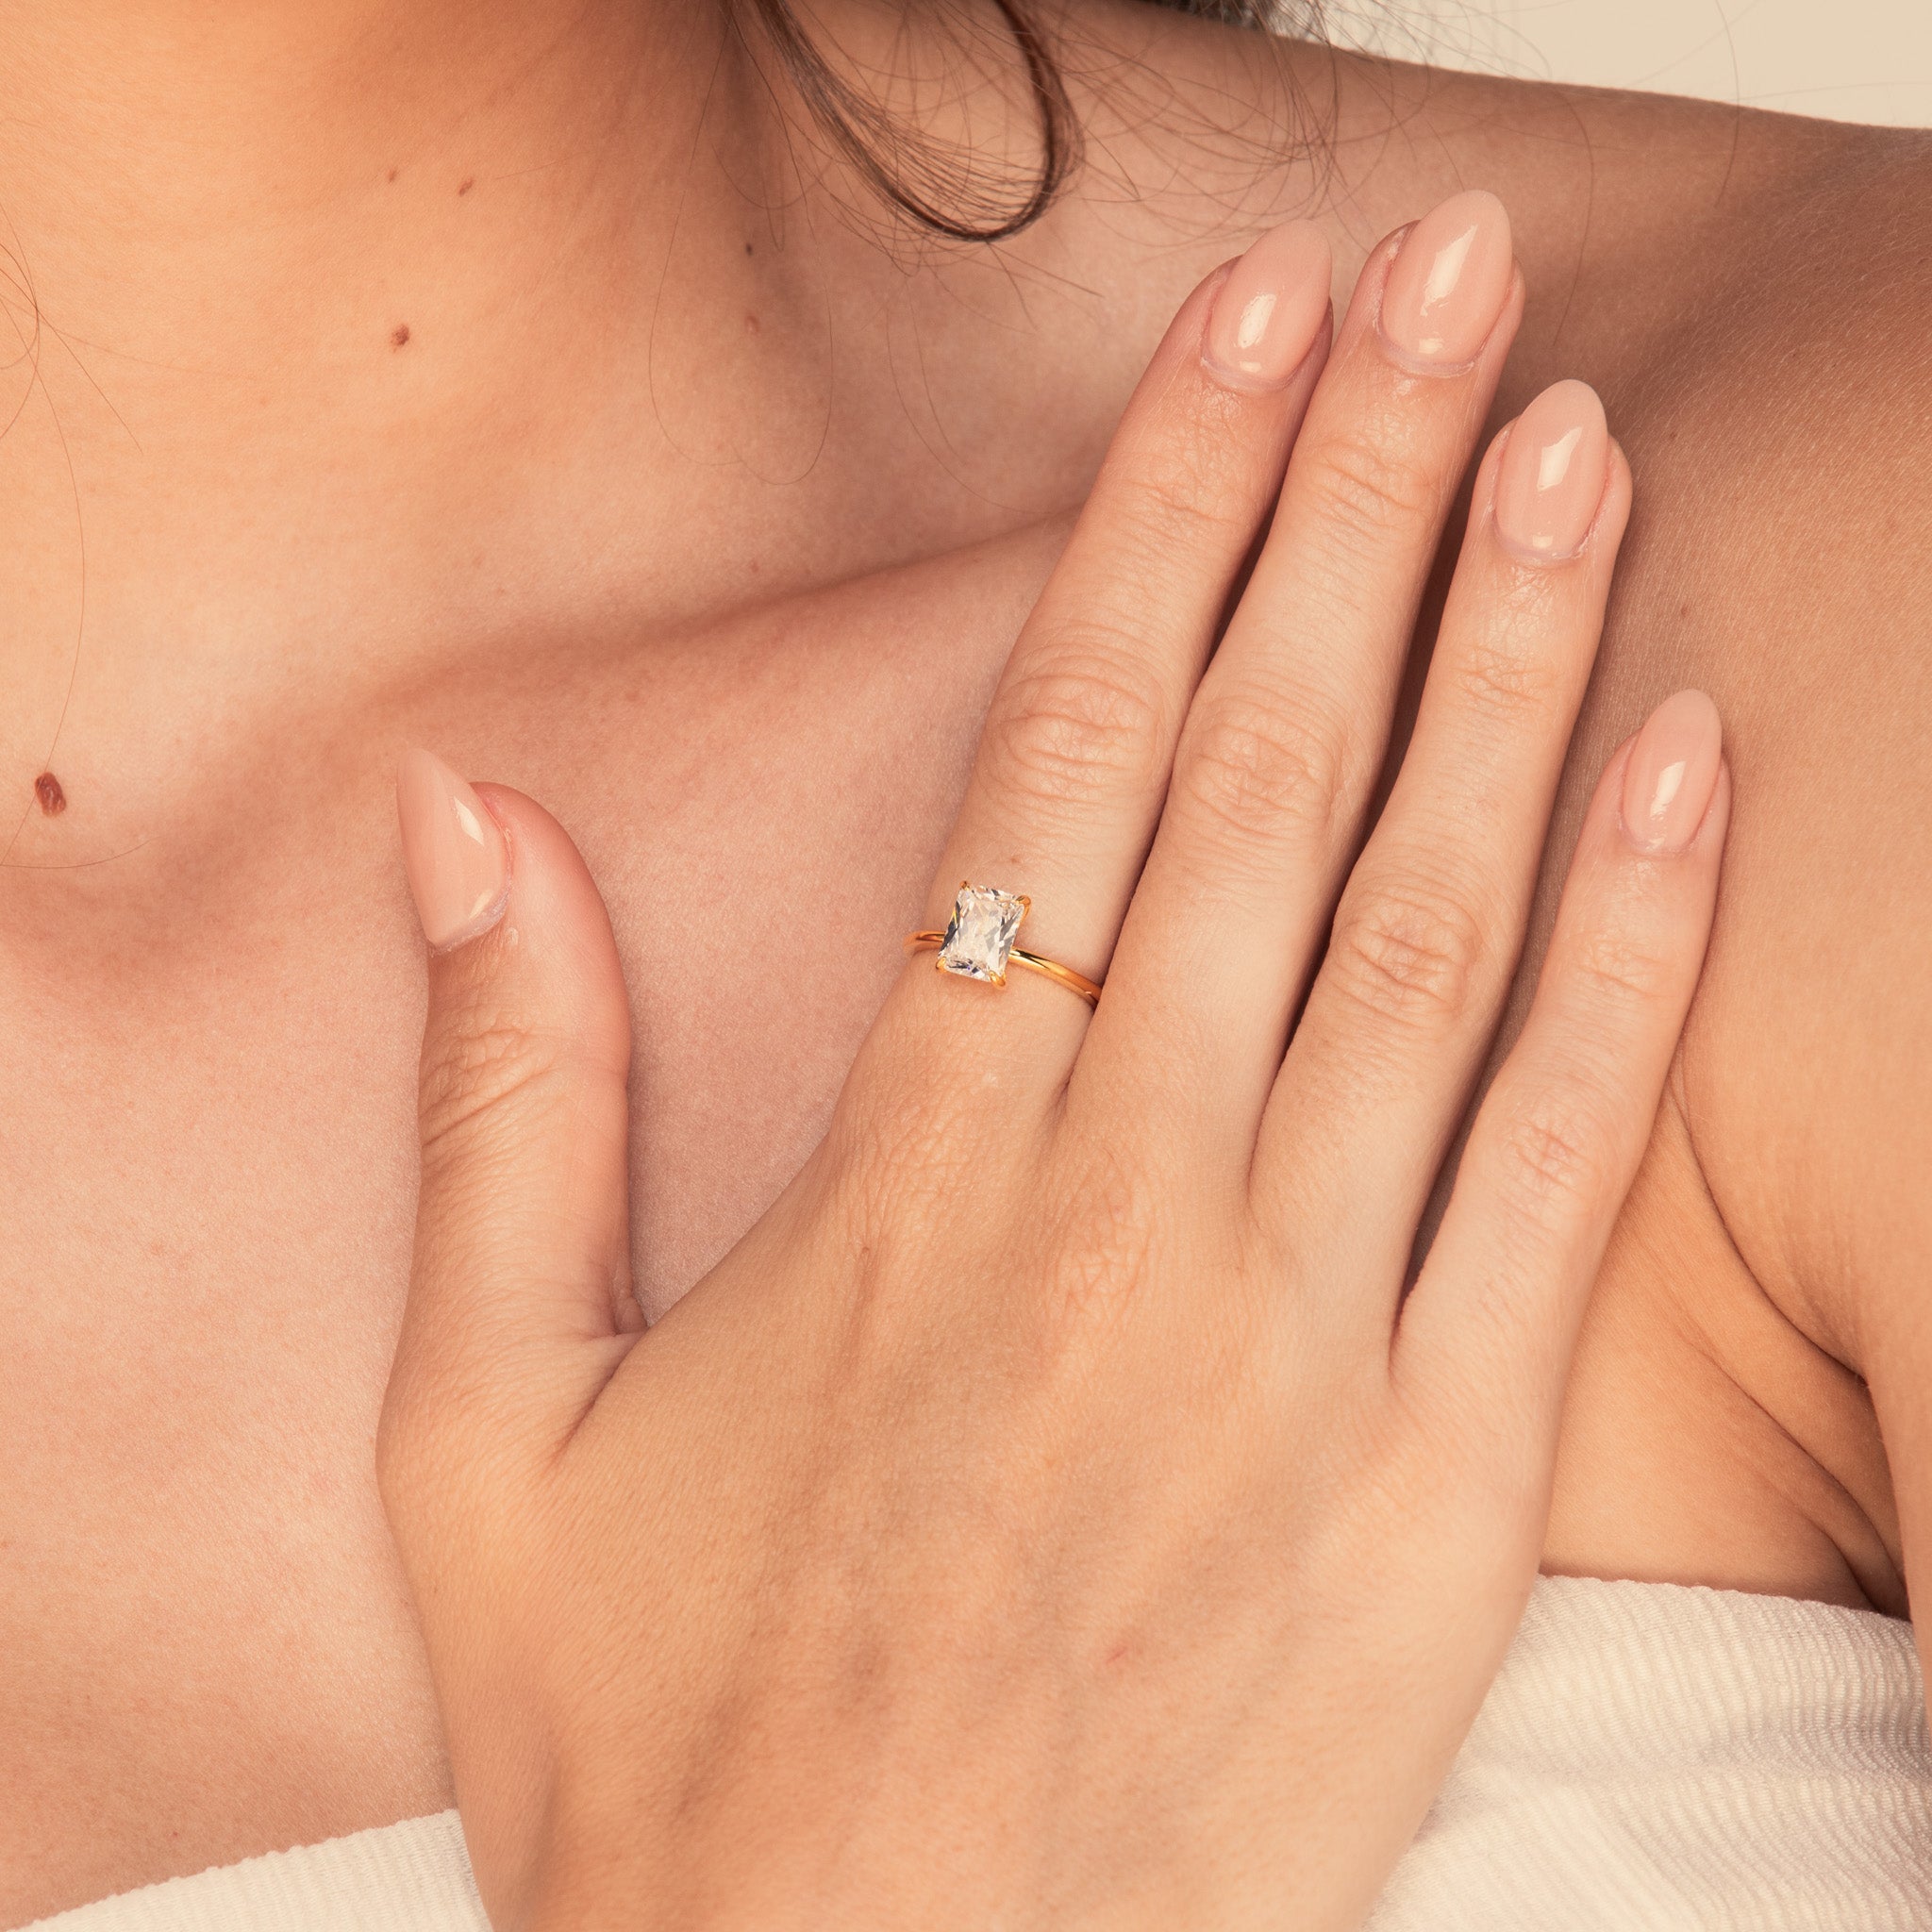 The Maya Emerald Sapphire Engagement Ring